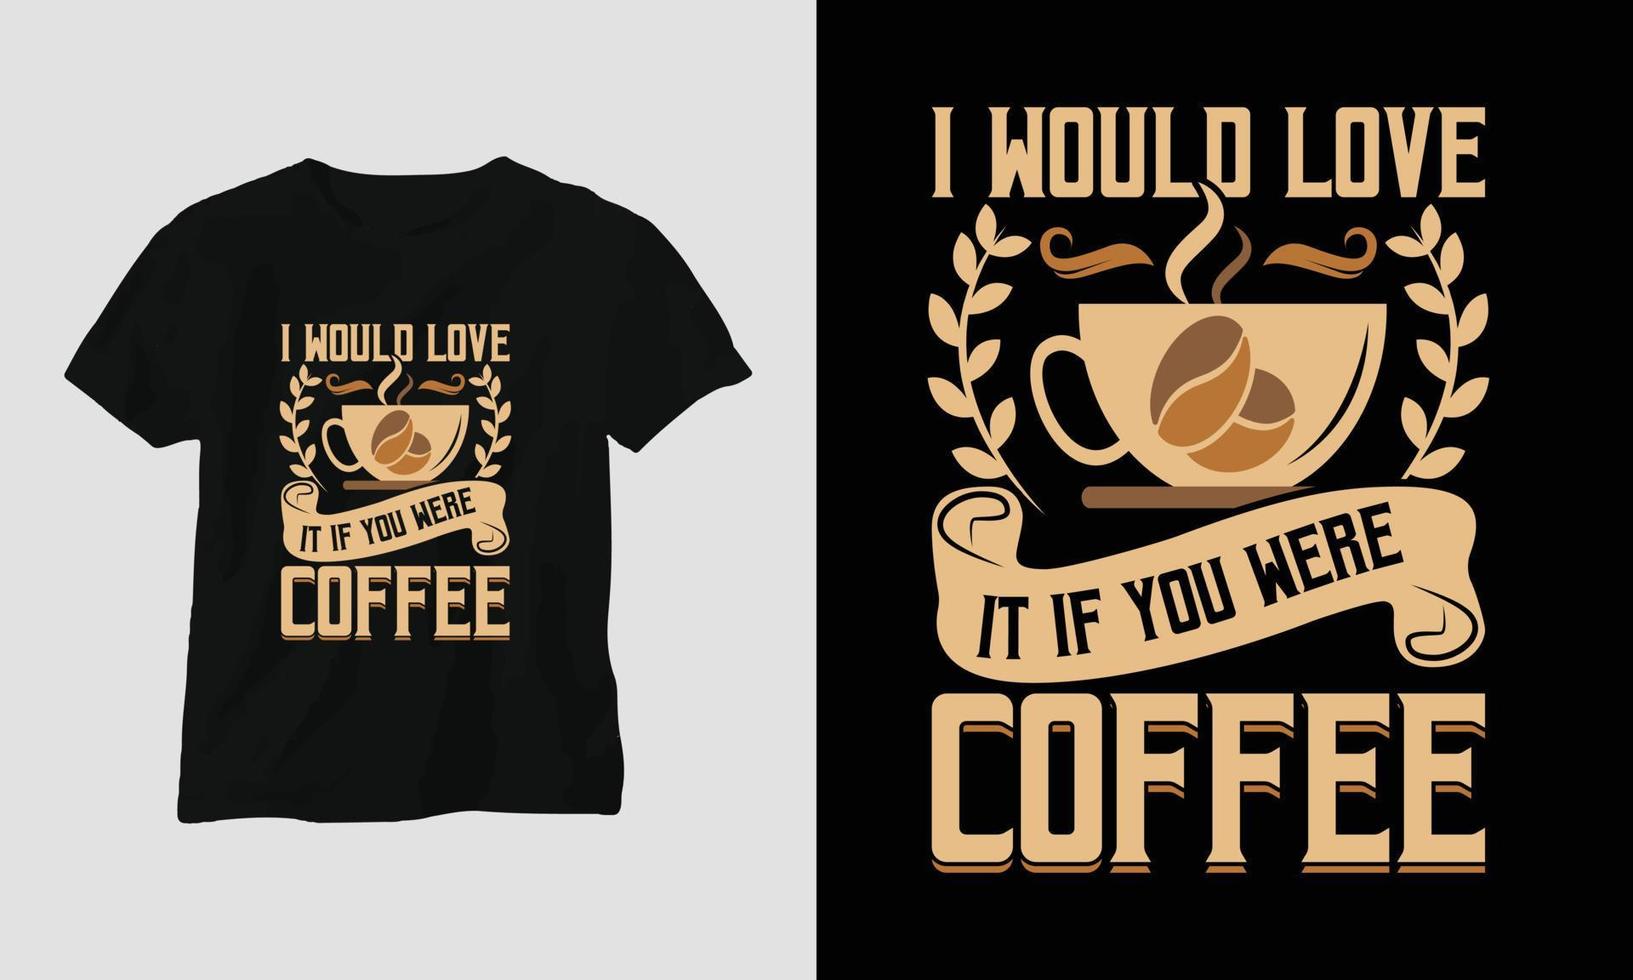 Kaffee Zitate T-Shirt Design Vorlage Vektor, Typografie Stil vektor